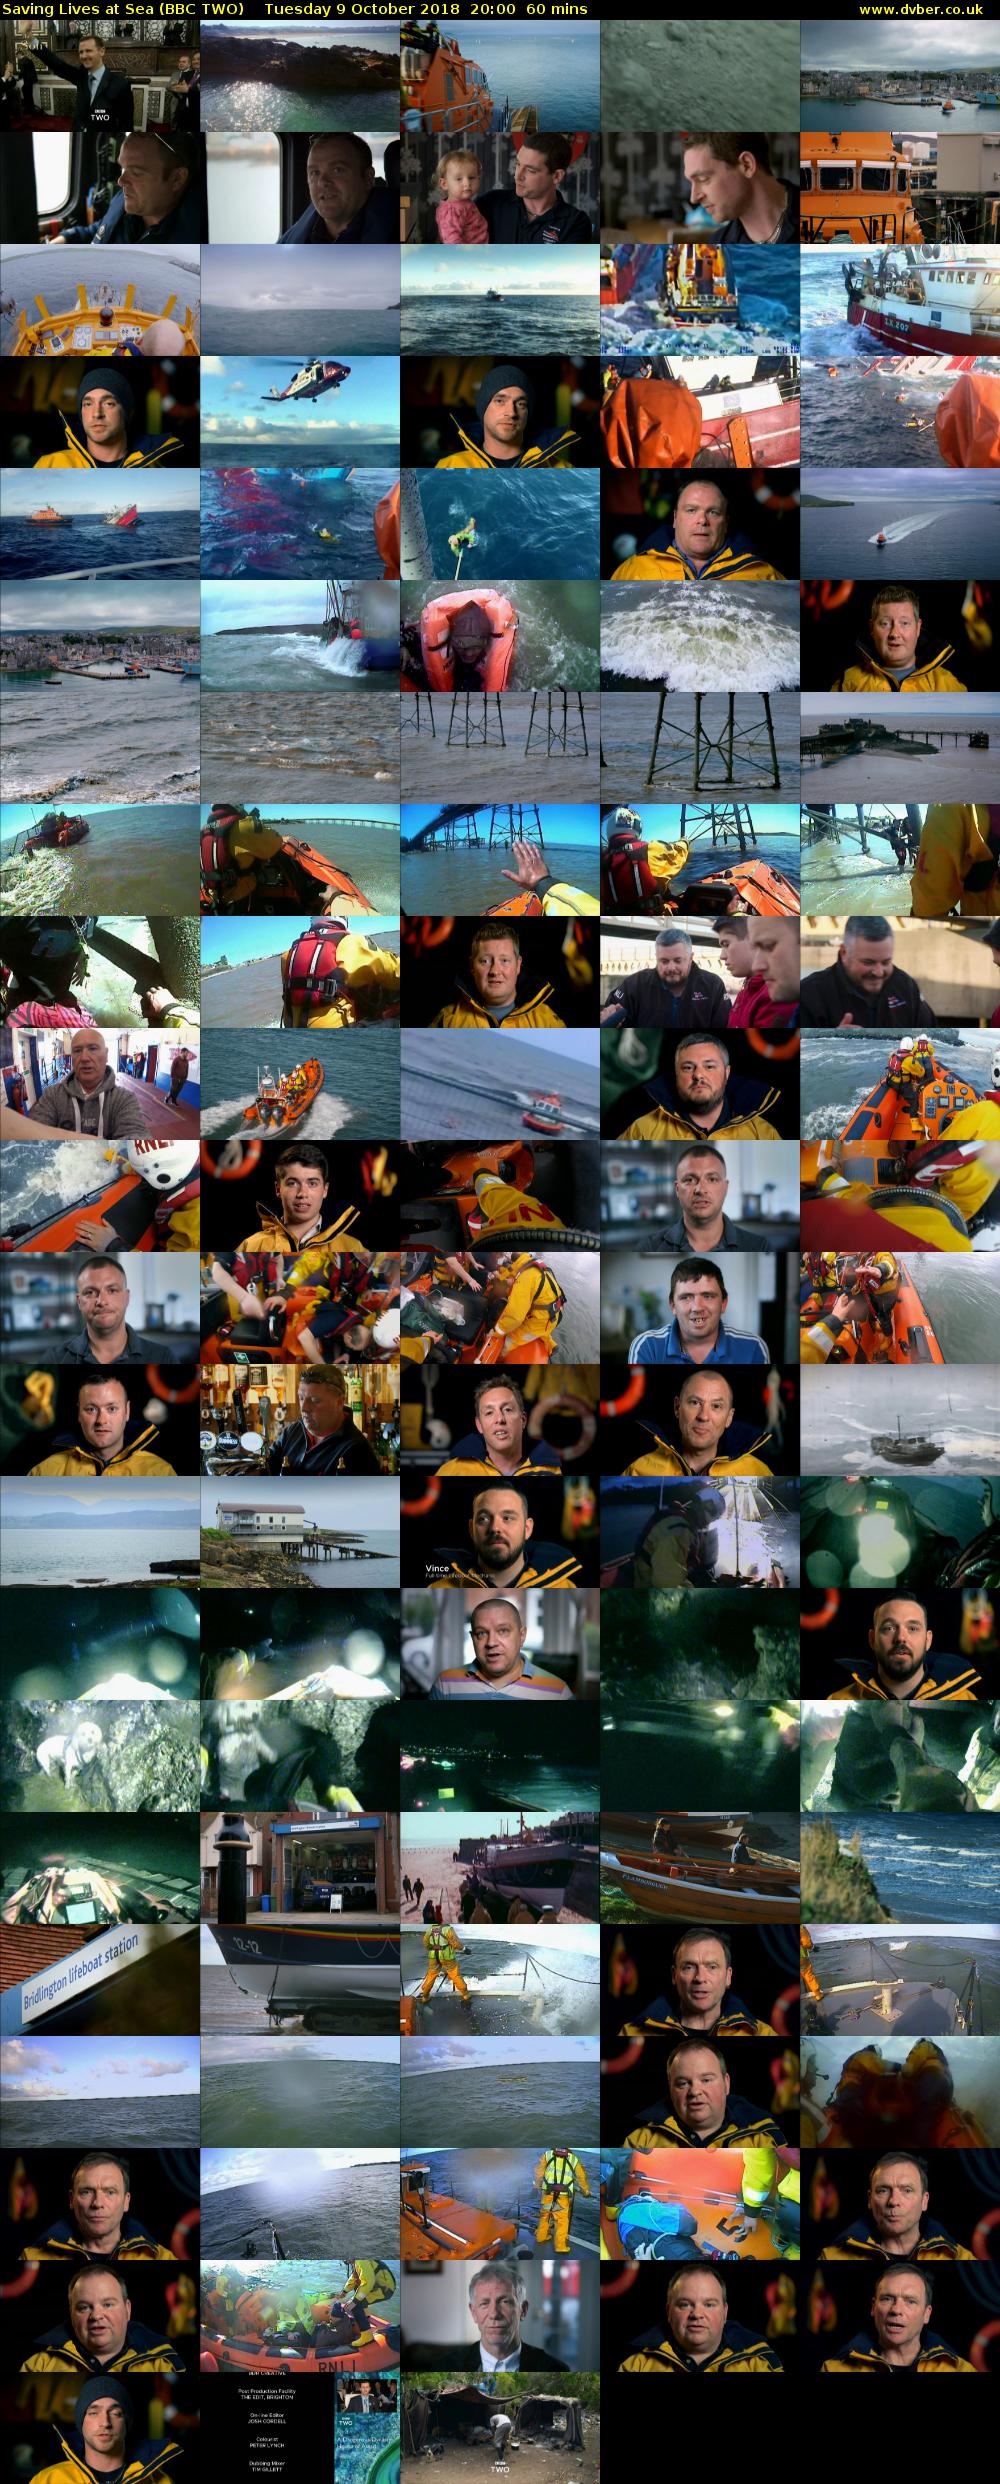 Saving Lives at Sea (BBC TWO) Tuesday 9 October 2018 20:00 - 21:00